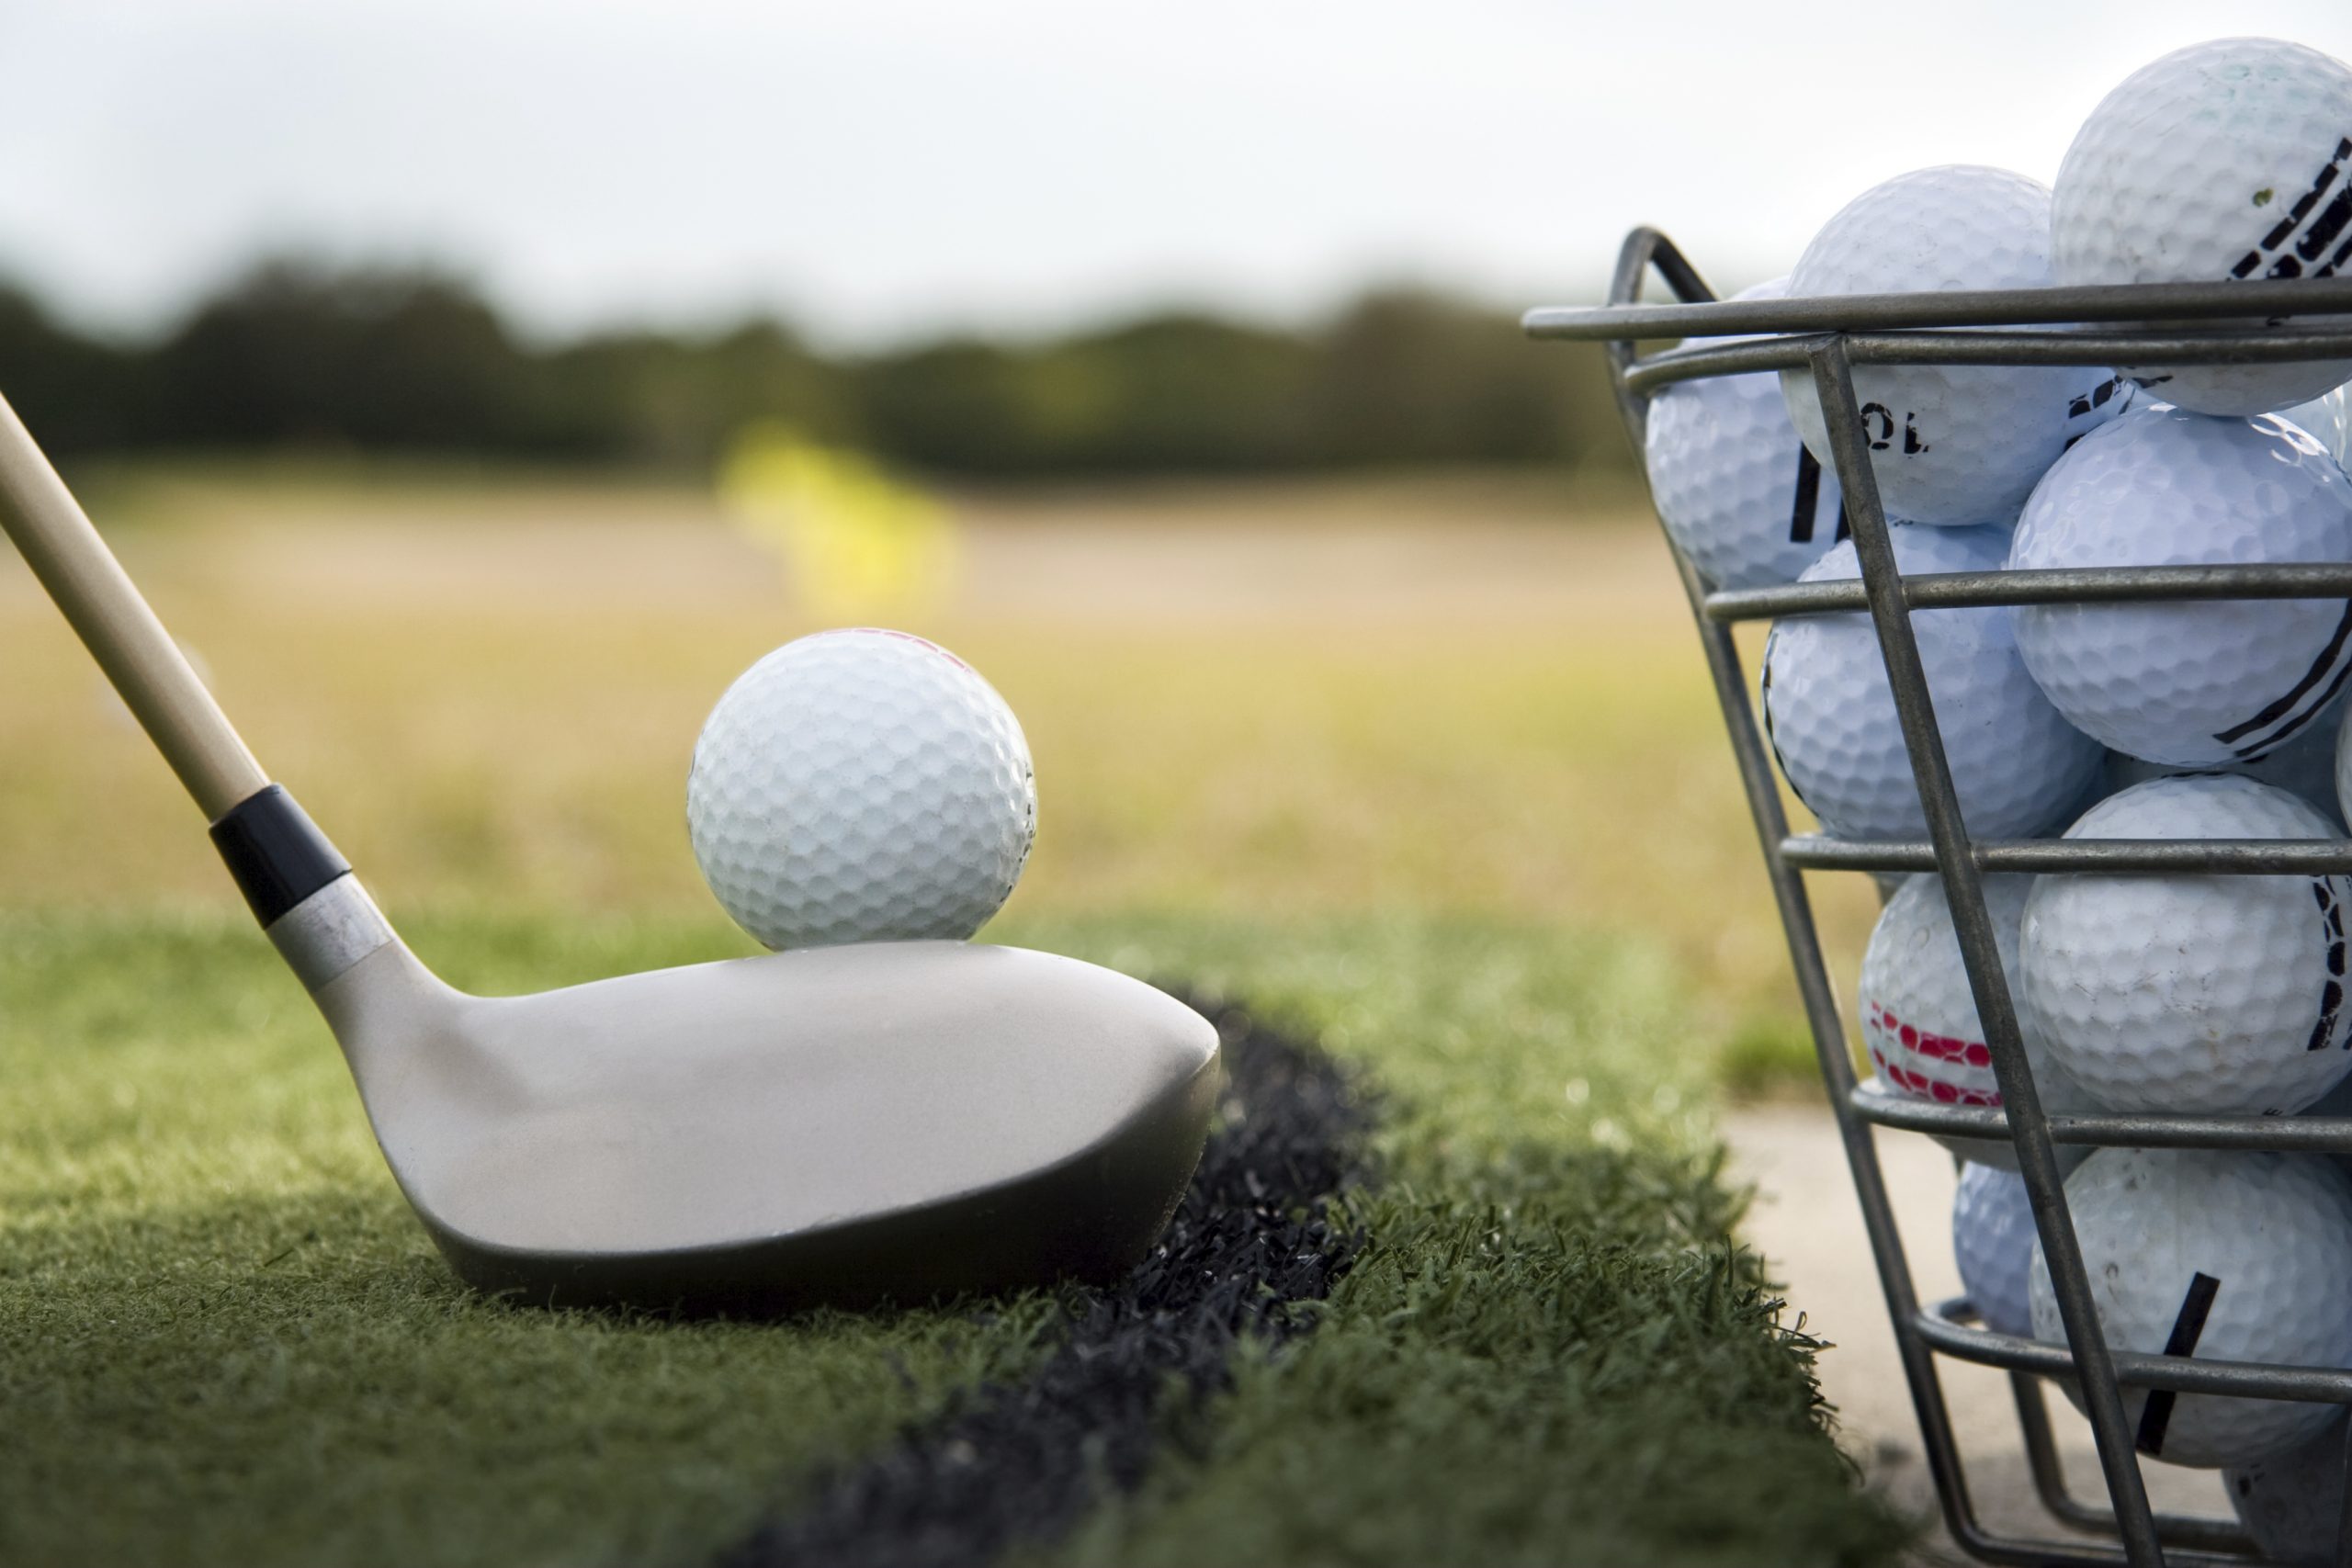 A golf ball, golf club and bucket of golf balls